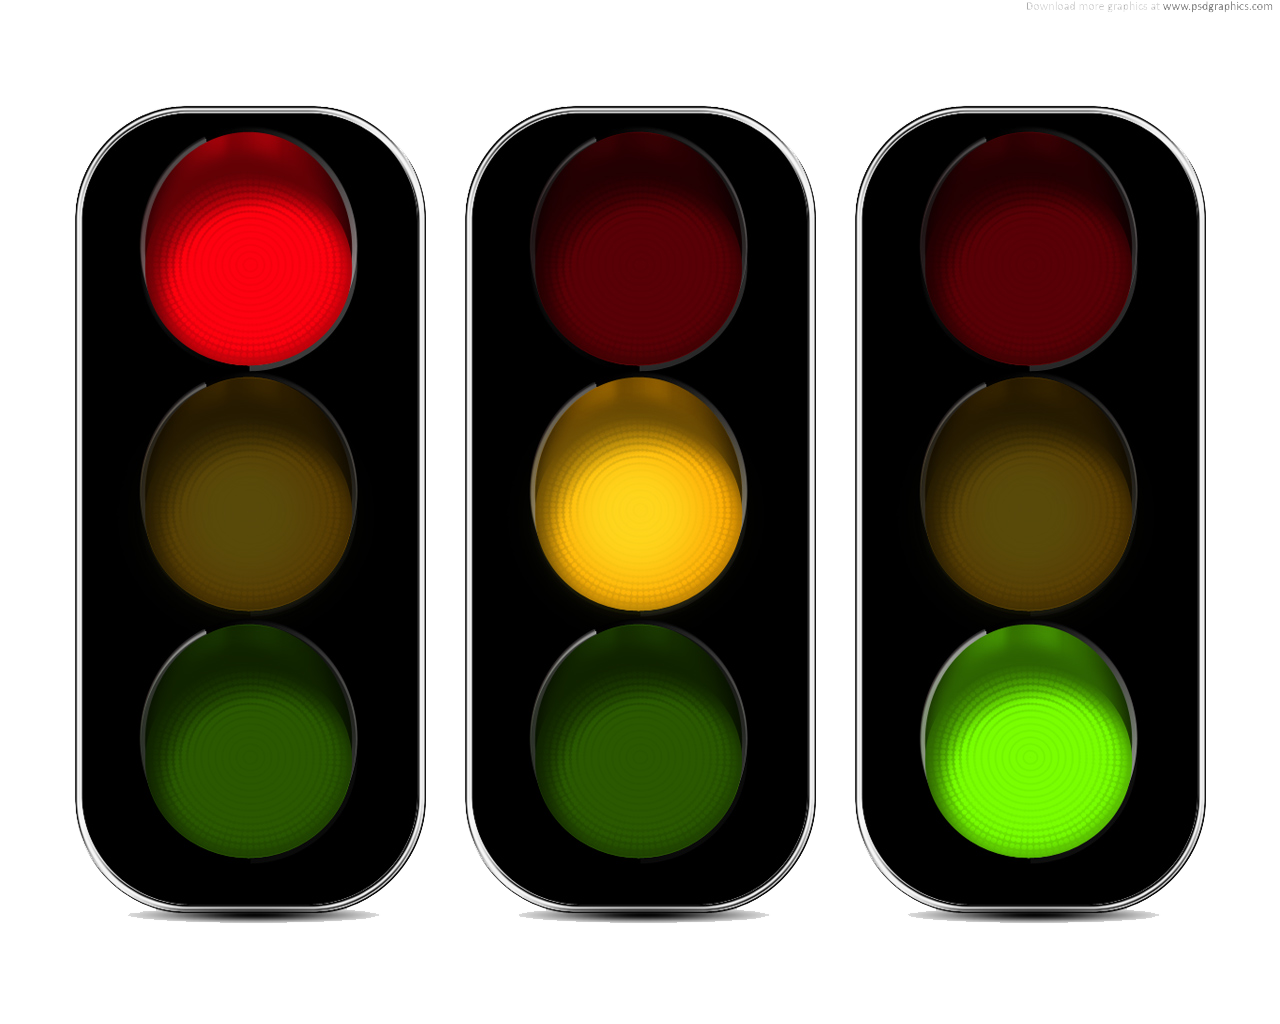 Traffic Light PNG Transparent Images | PNG All